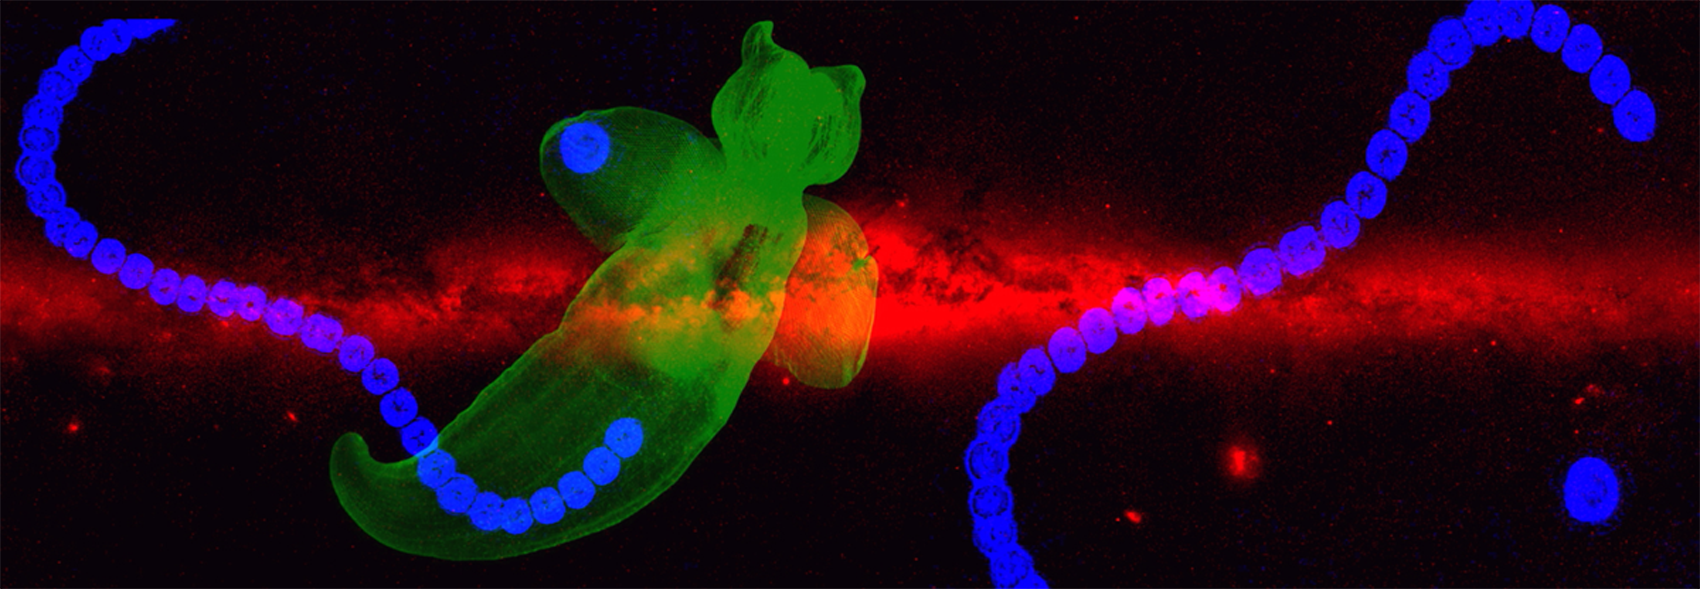 Ali Hossaini - Bacteria Undersea Galaxy